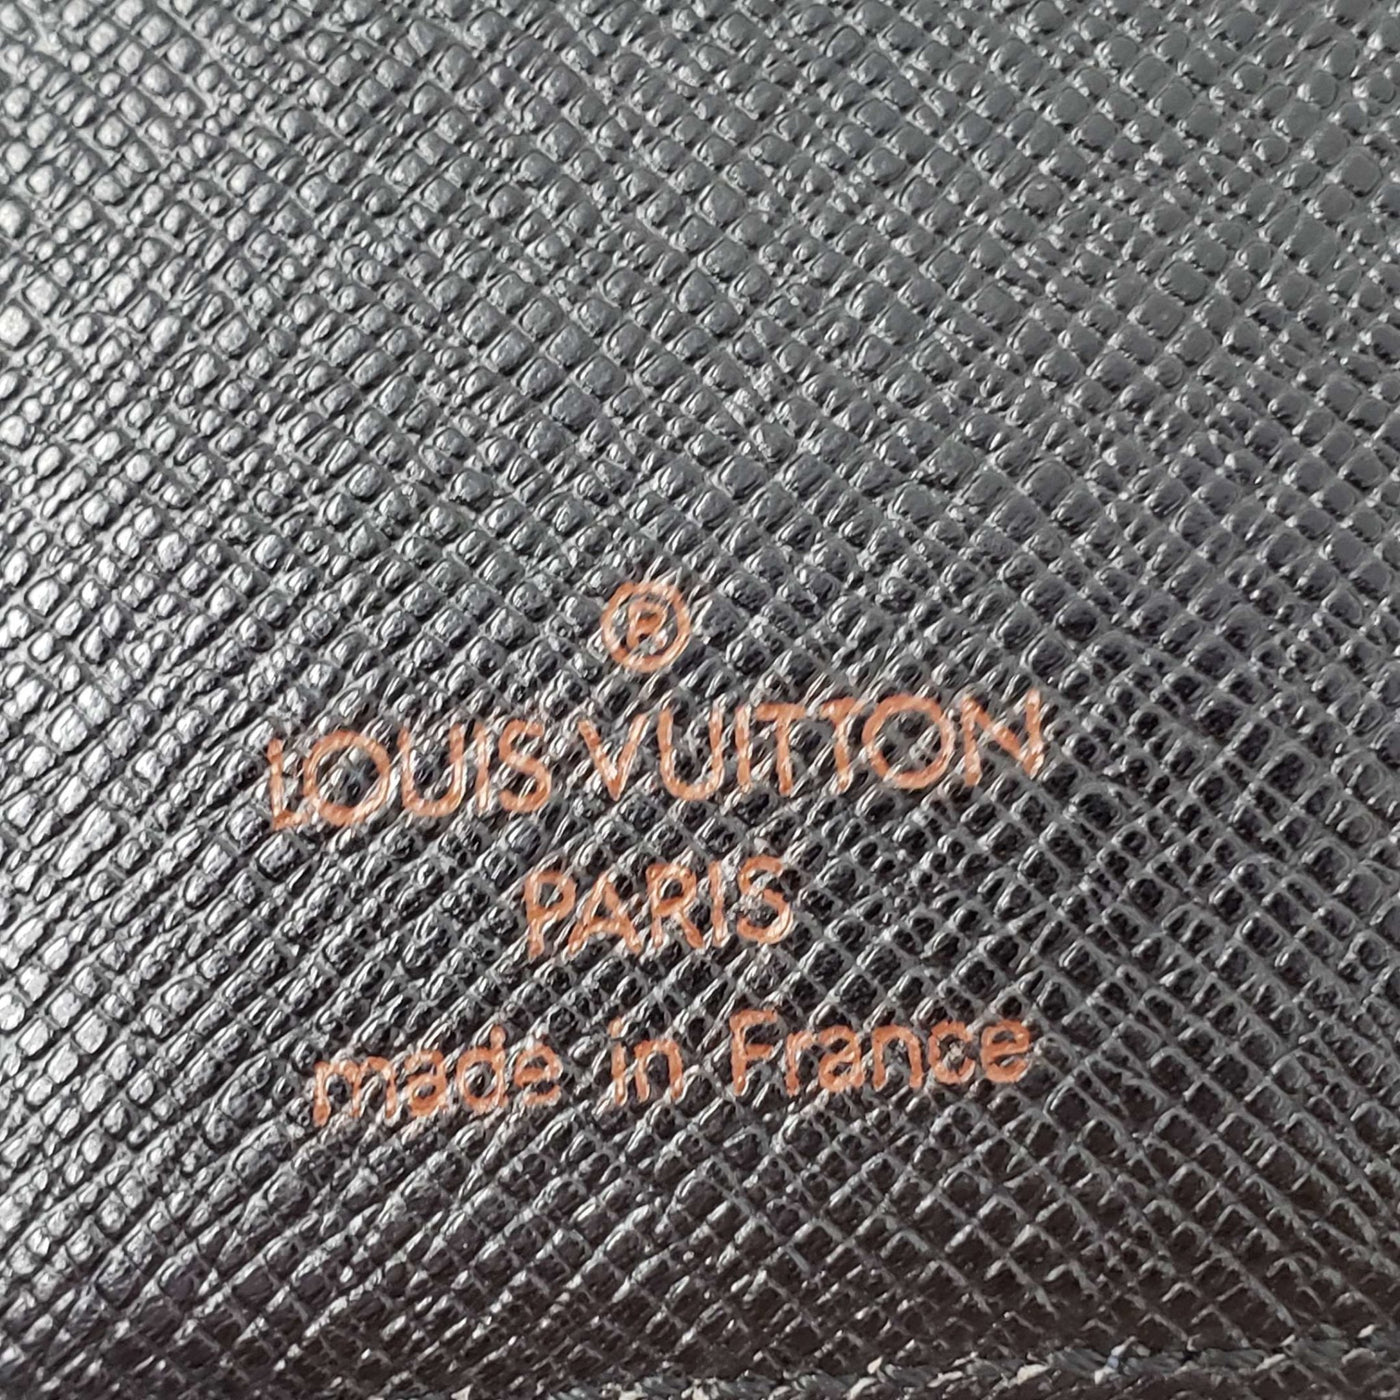 LOUIS VUITTON Epi Agenda MM Blue Notebook Cover | Luxury Cheaper.